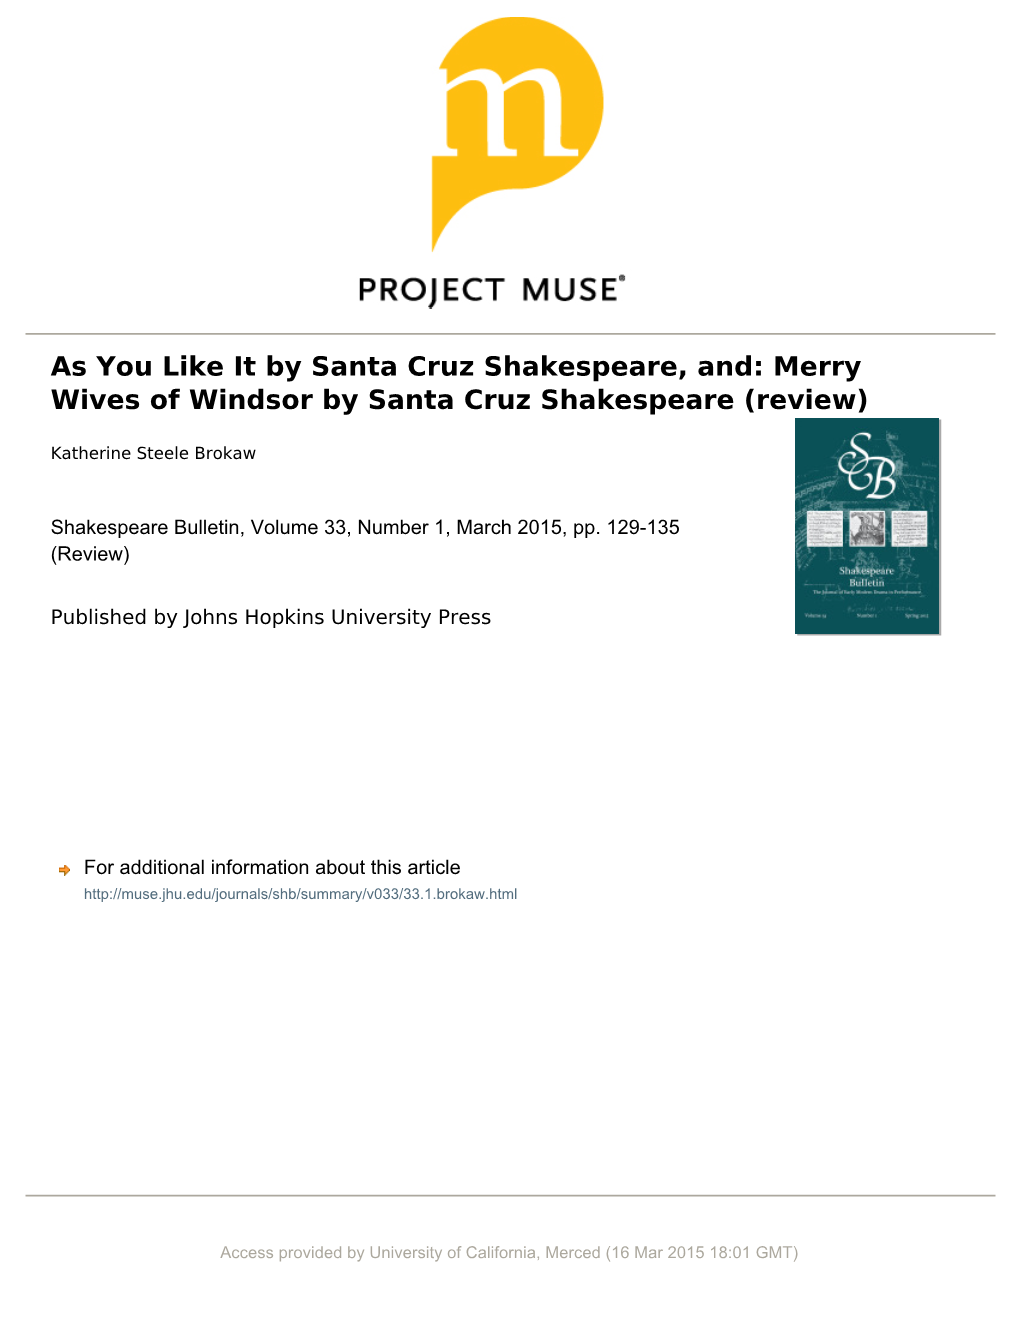 Merry Wives of Windsor by Santa Cruz Shakespeare